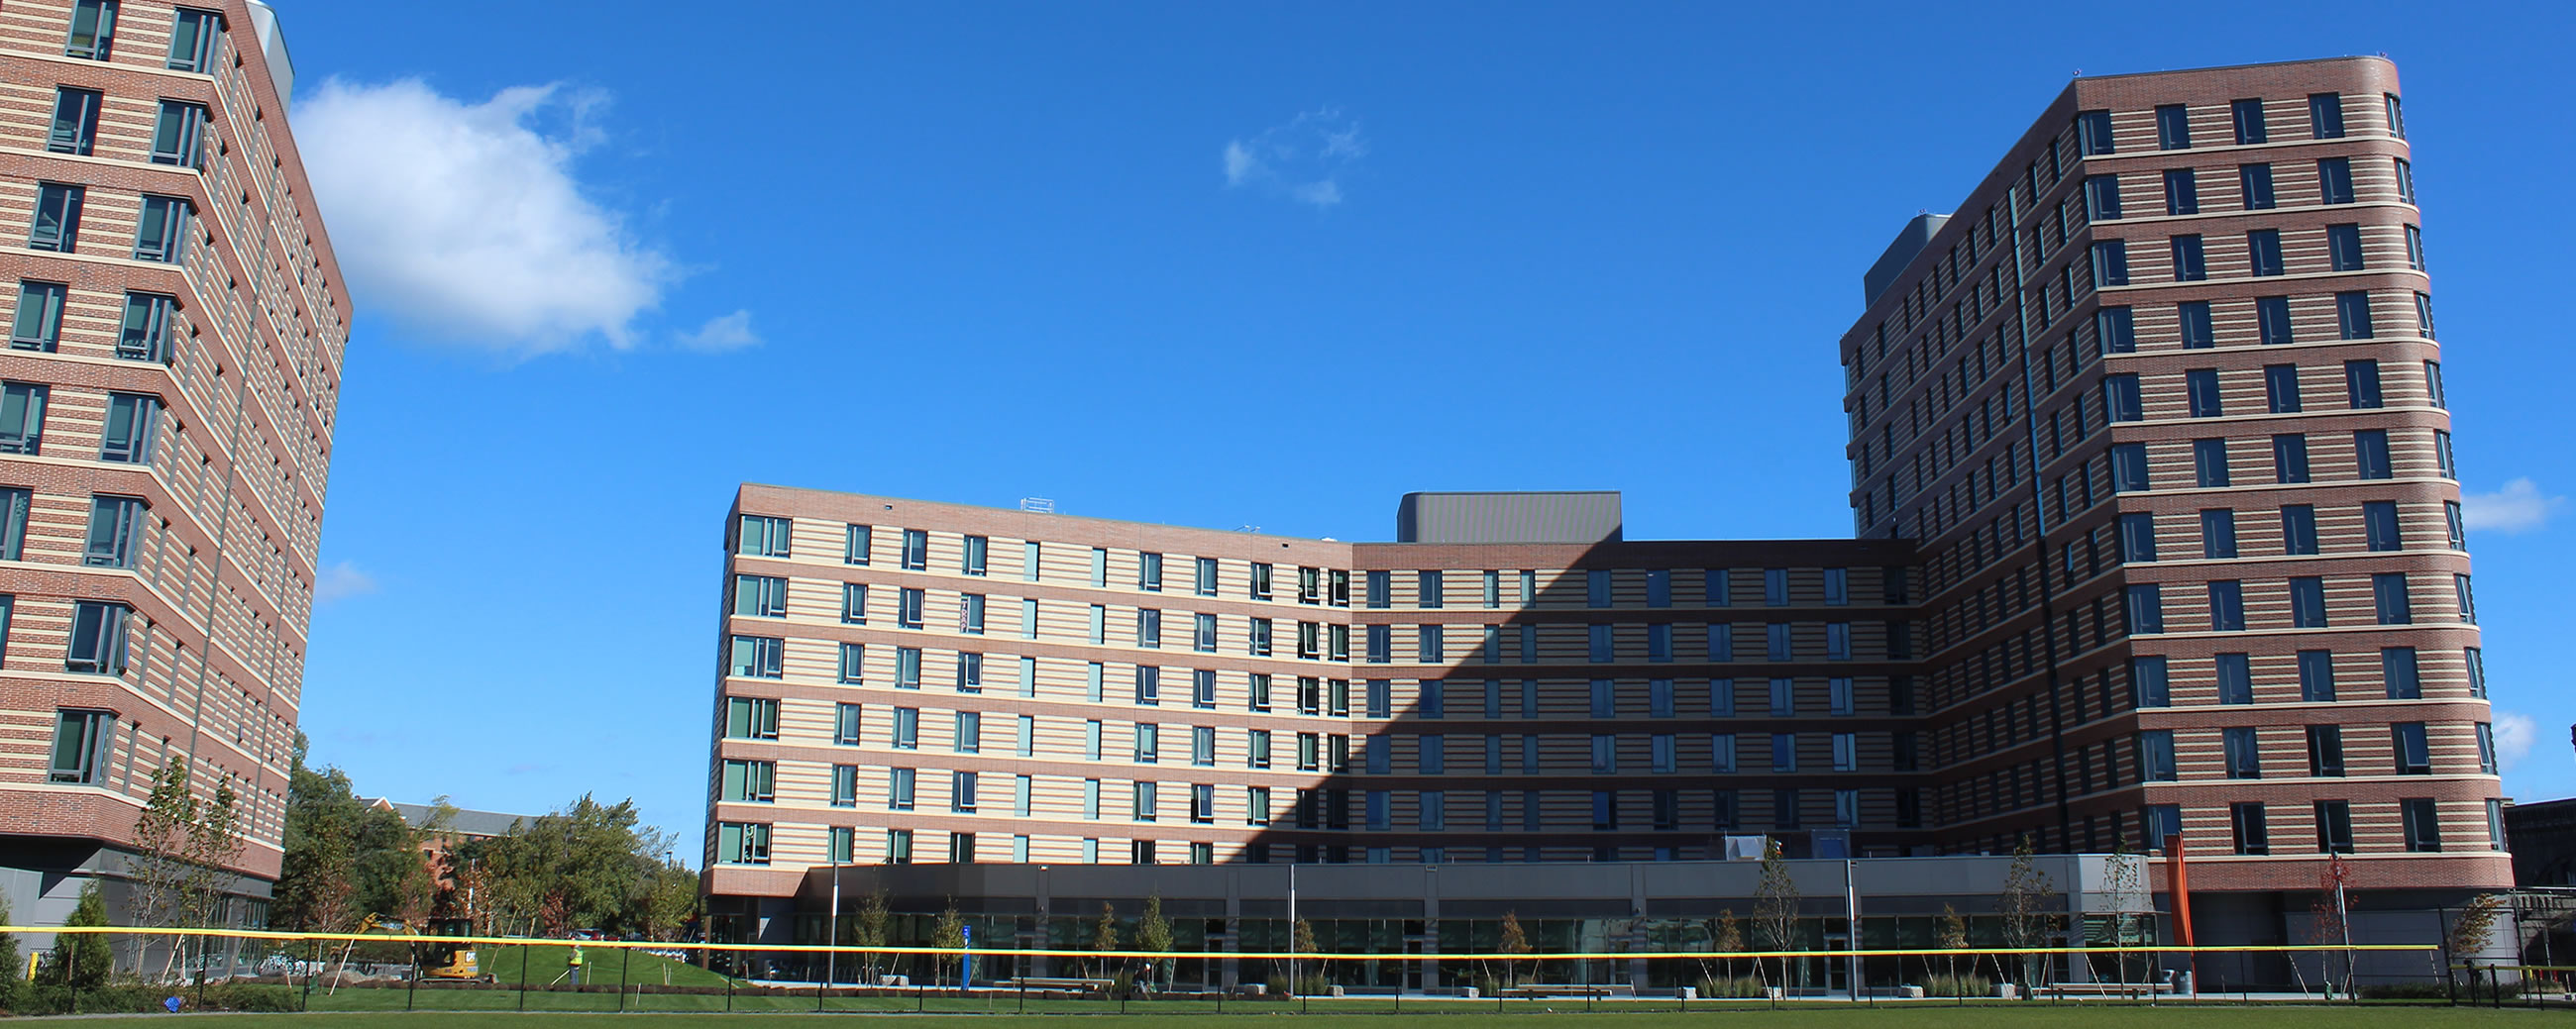 UMass Boston Residence Halls - Code Red Consultants